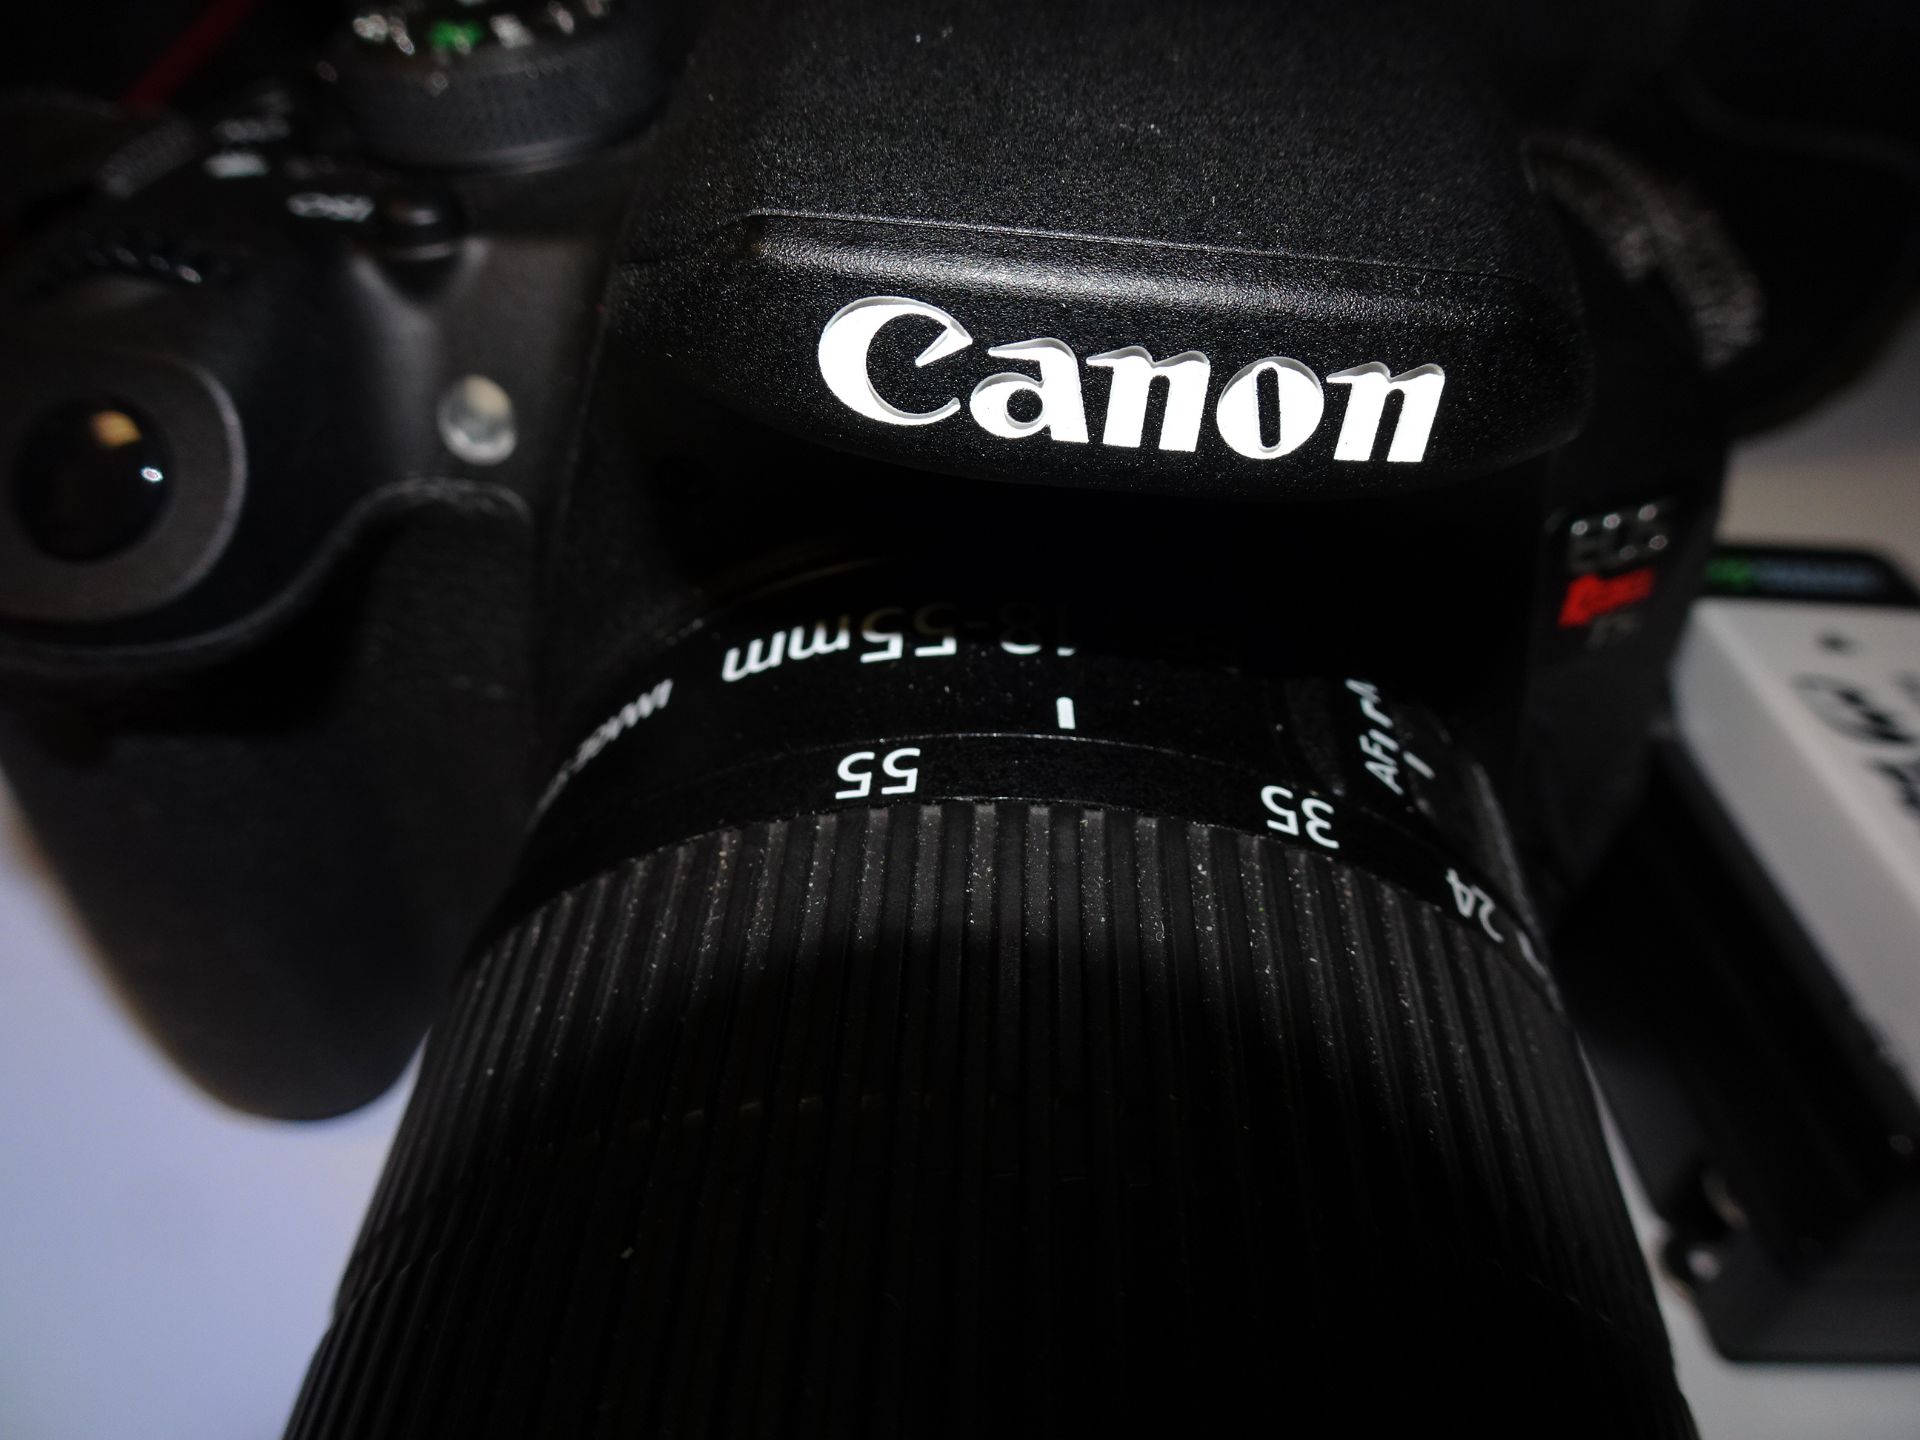 Canon EOS Rebel T5i DSLR sn 302075003371 w/ Canon EF-S 18-55mm 1:3.5-5.6 IS STM /58mm Lens, (2) - Image 11 of 15